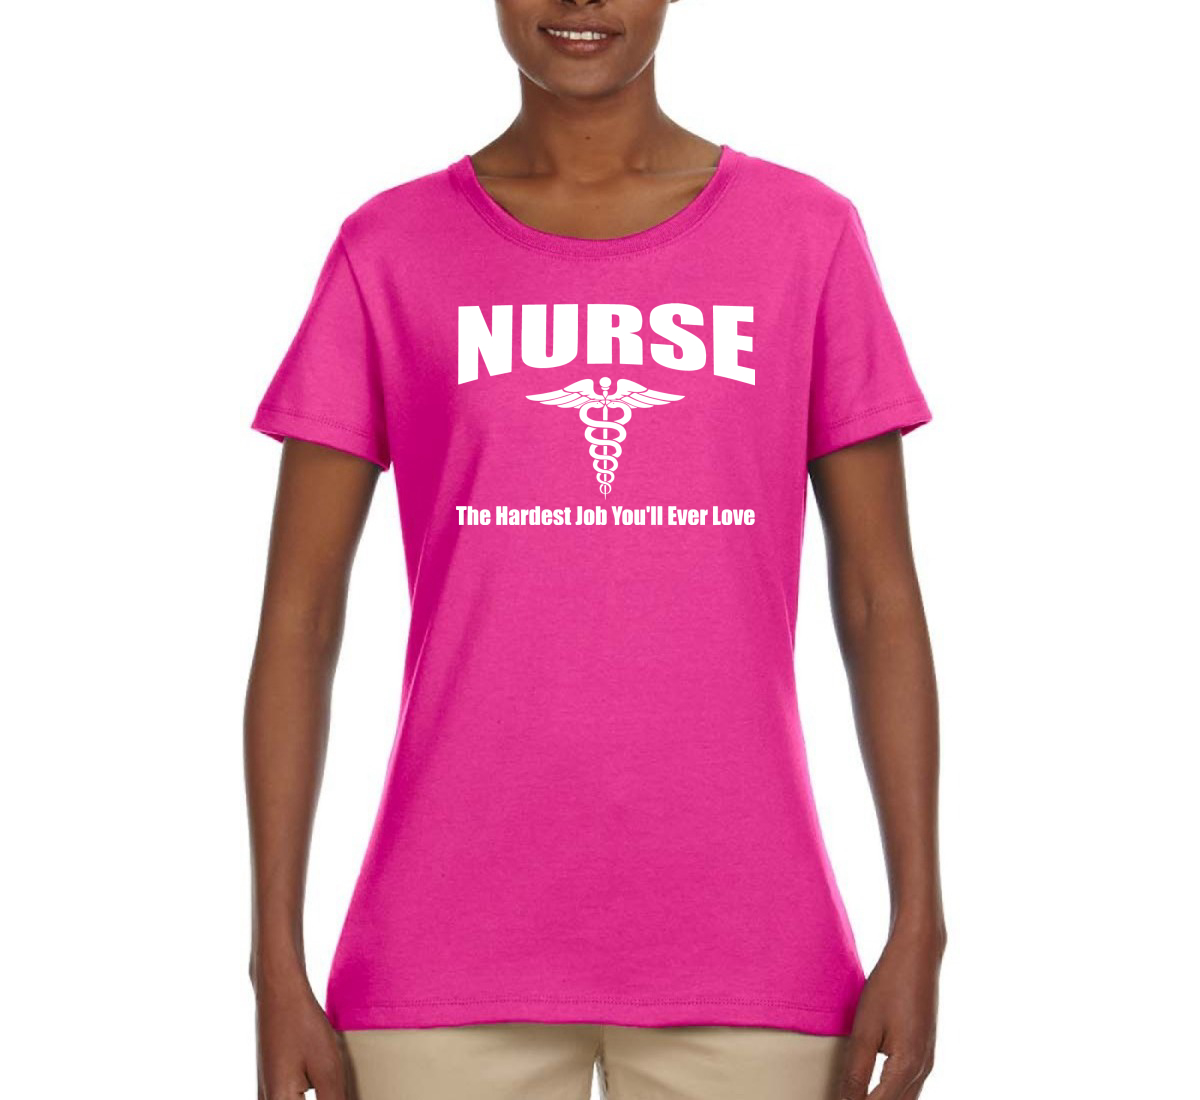 Nurse the Hardest Job You'll Ever Love | Womens Pop Culture Graphic T-Shirt, Fuschia, X-Large - image 2 of 3